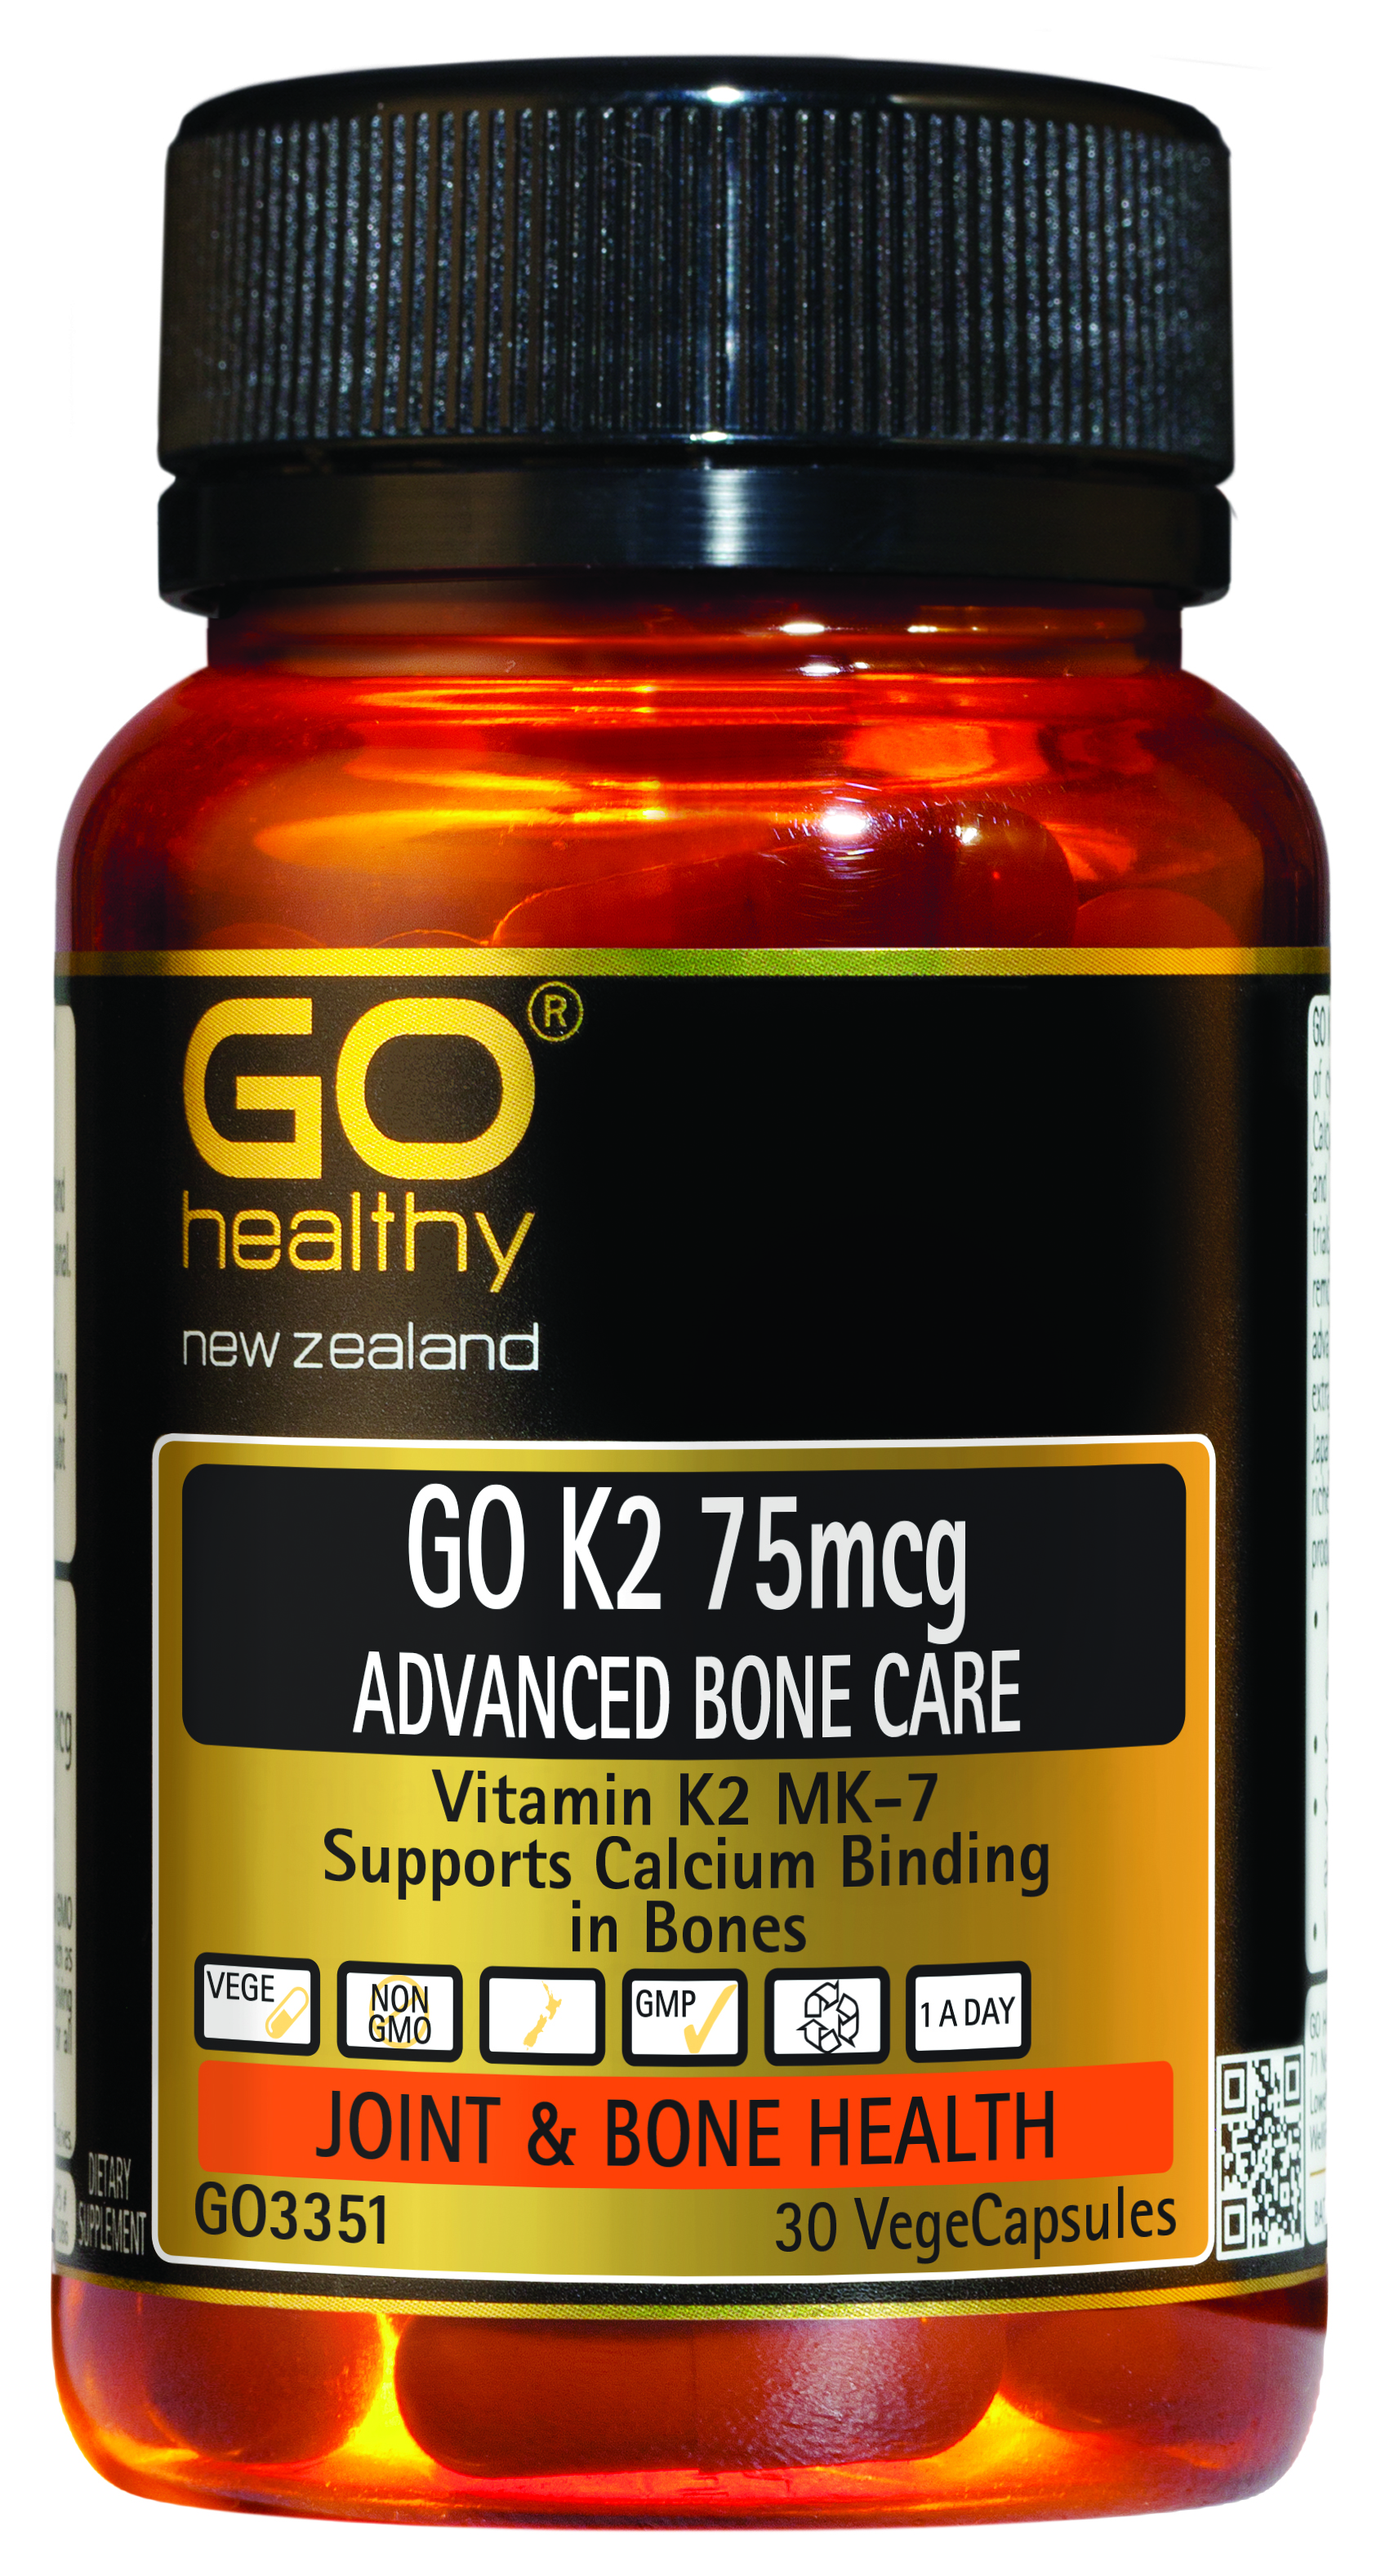 GO Healthy Vitamin K2 30 Vege Capsules